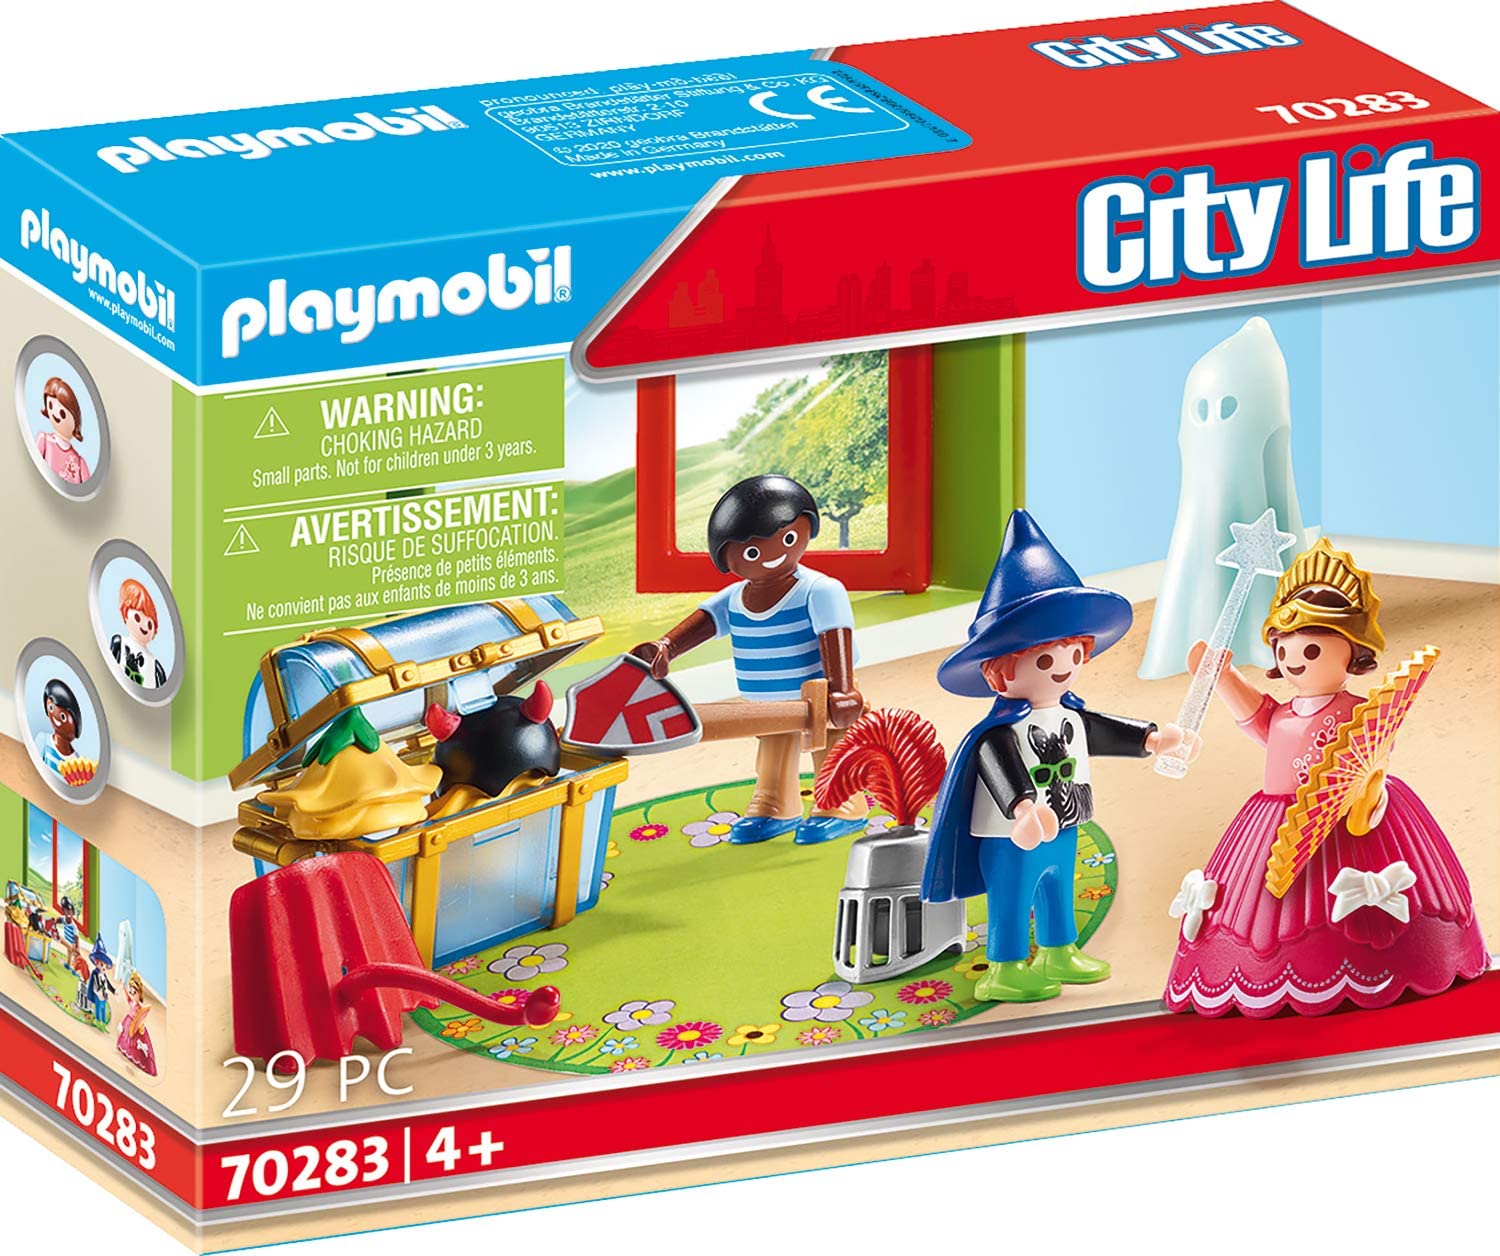 Playmobil City Life 70283 City Life Playmobil Children With Fancy Dress Box